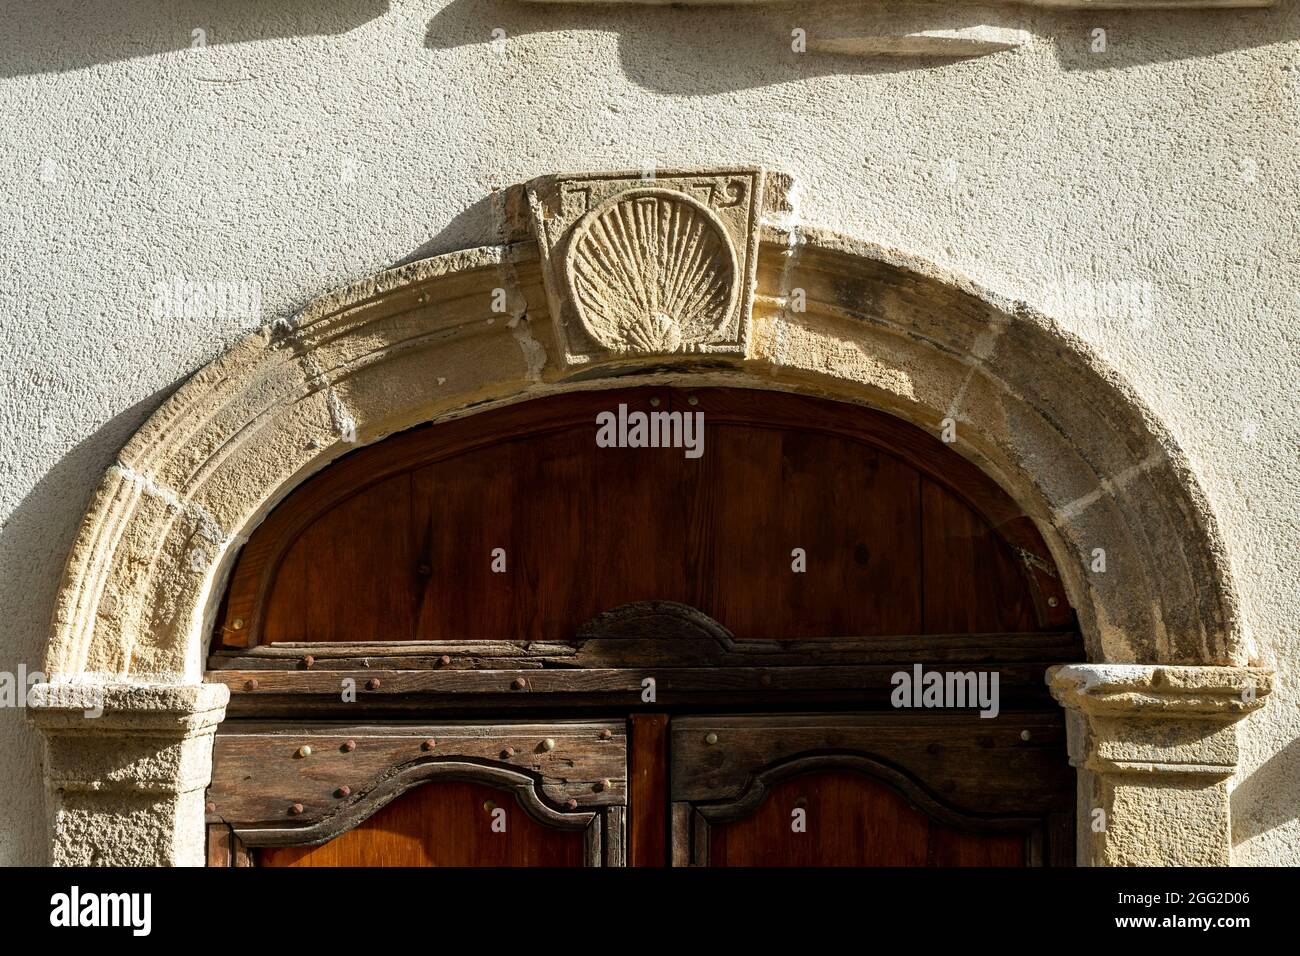 Scultura di una conchiglia di cuoio capelluto , Saint Amamnt Tallende, Puy de Dome, Auvergne Rhone Alpes, Francia Foto Stock